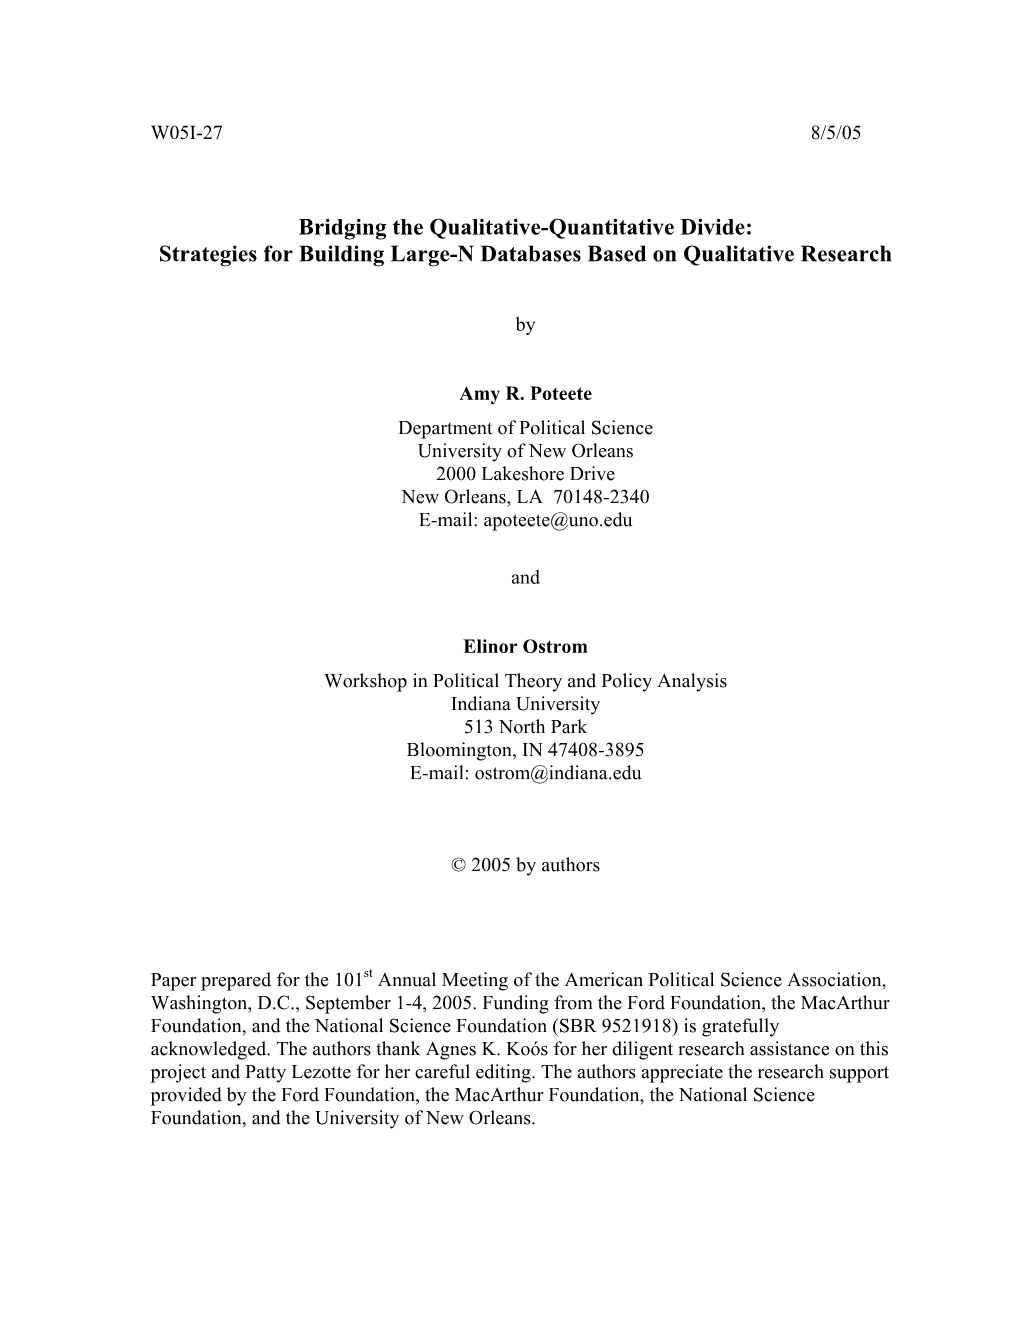 Bridging the Qualitative-Quantitative Divide: Strategies for Building Large-N Databases Based on Qualitative Research